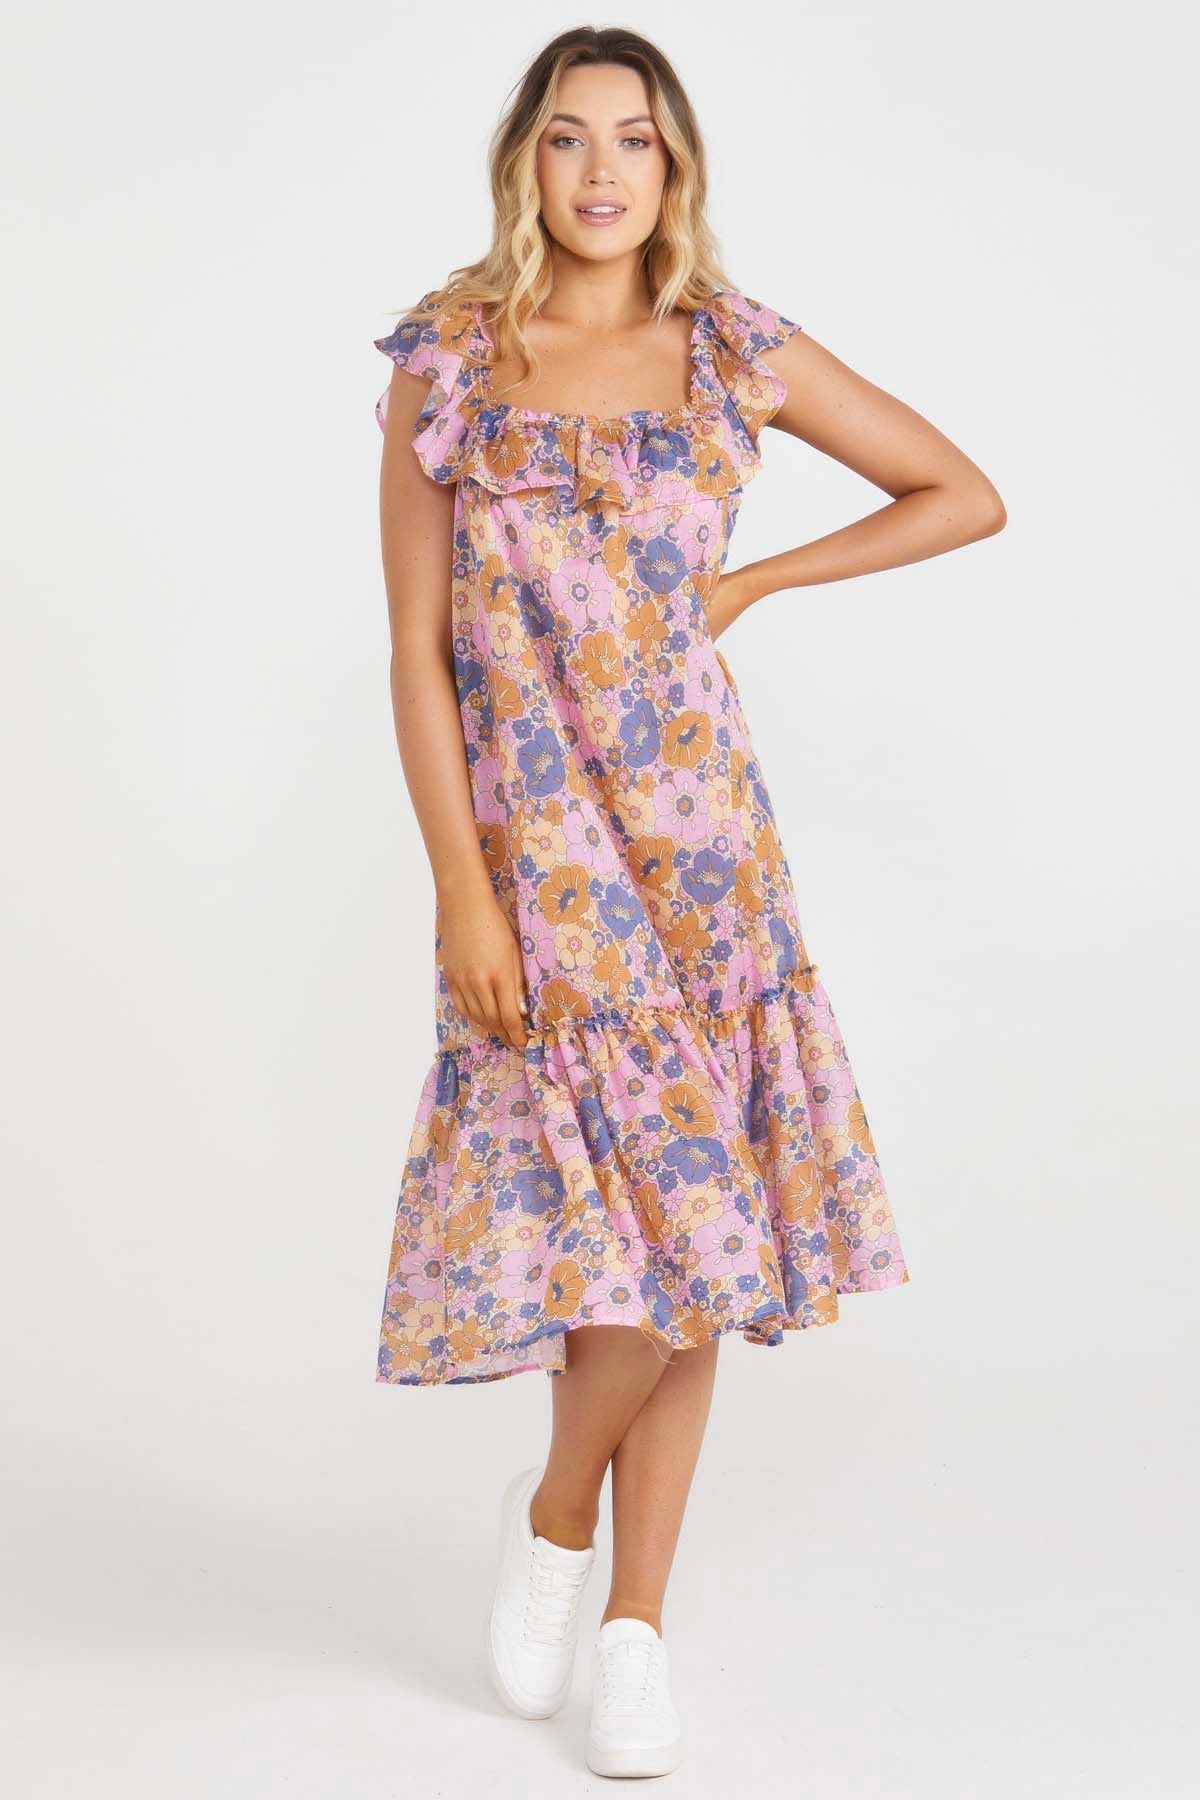 Sass Isla Ruffle Midi Dress in Retro Floral Print - Hey Sara